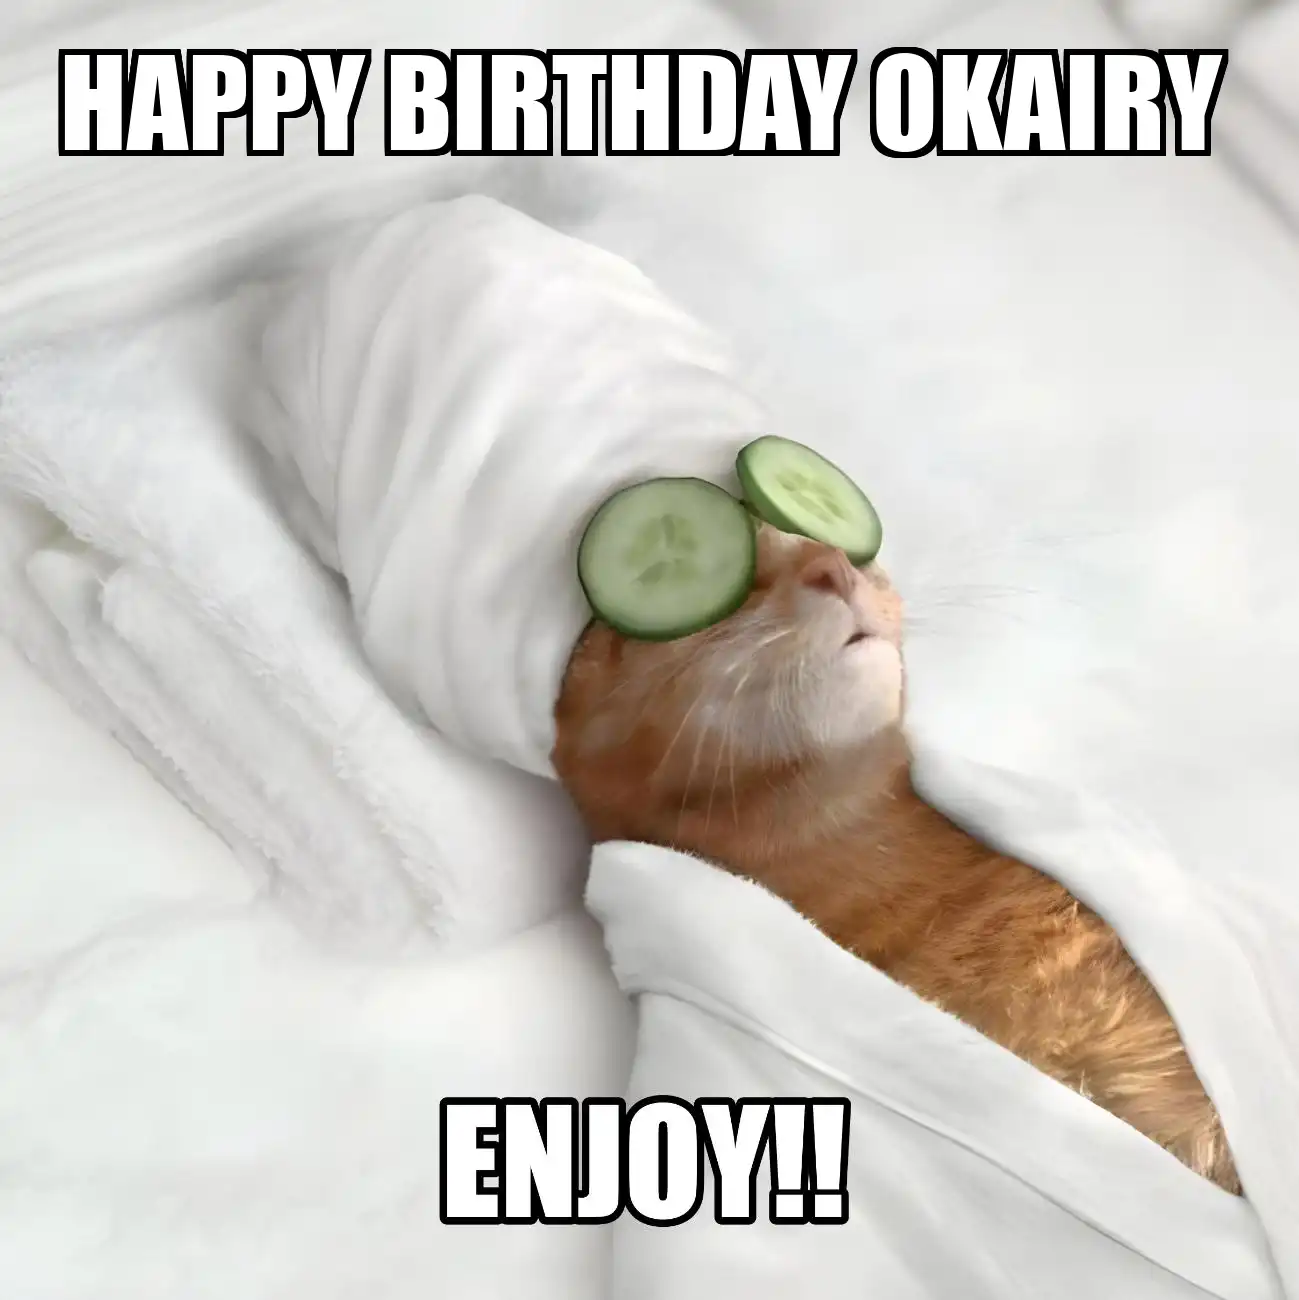 Happy Birthday Okairy Enjoy Cat Meme